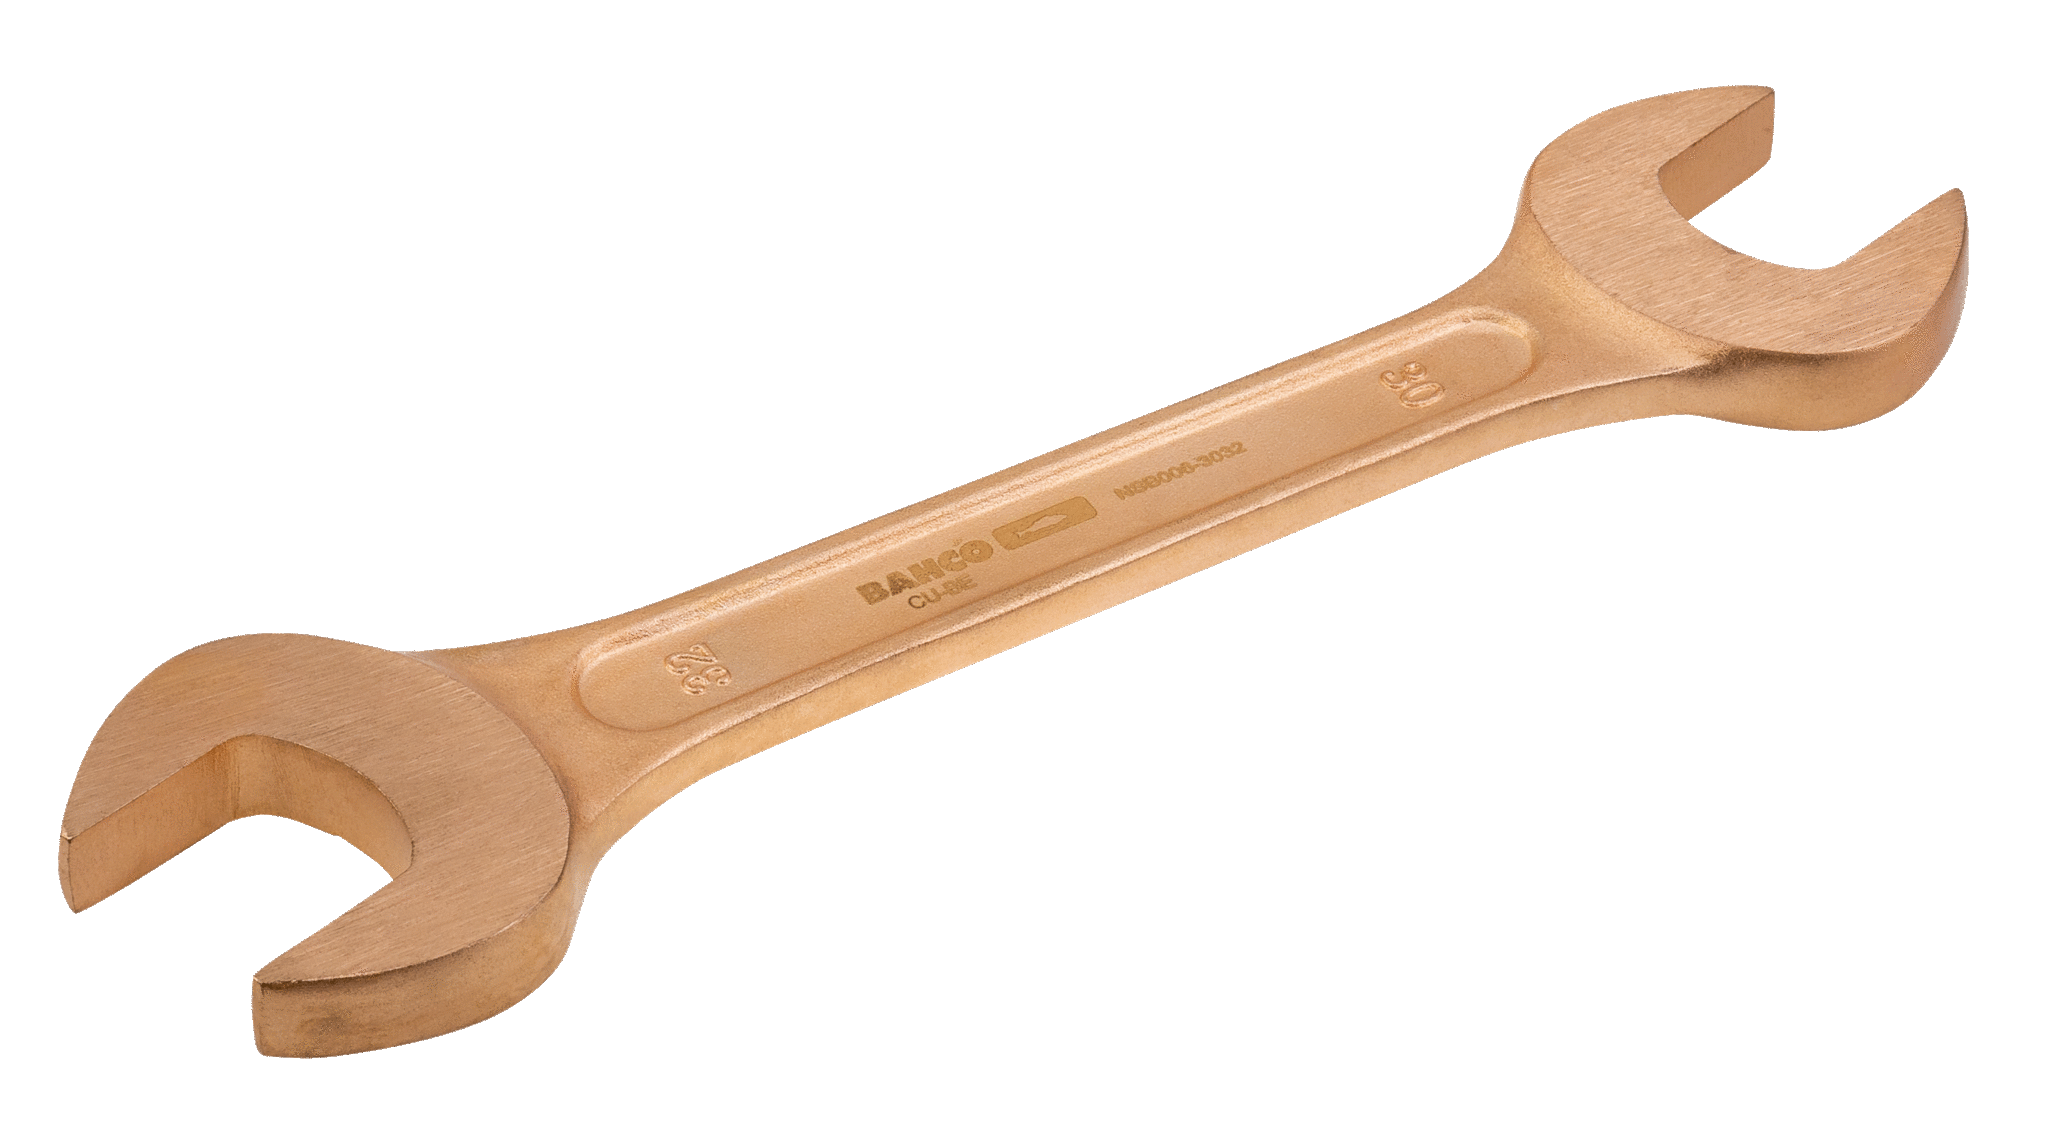 картинка Двусторонние рожковые ключи BAHCO NSB006-1014 от магазина "Элит-инструмент"